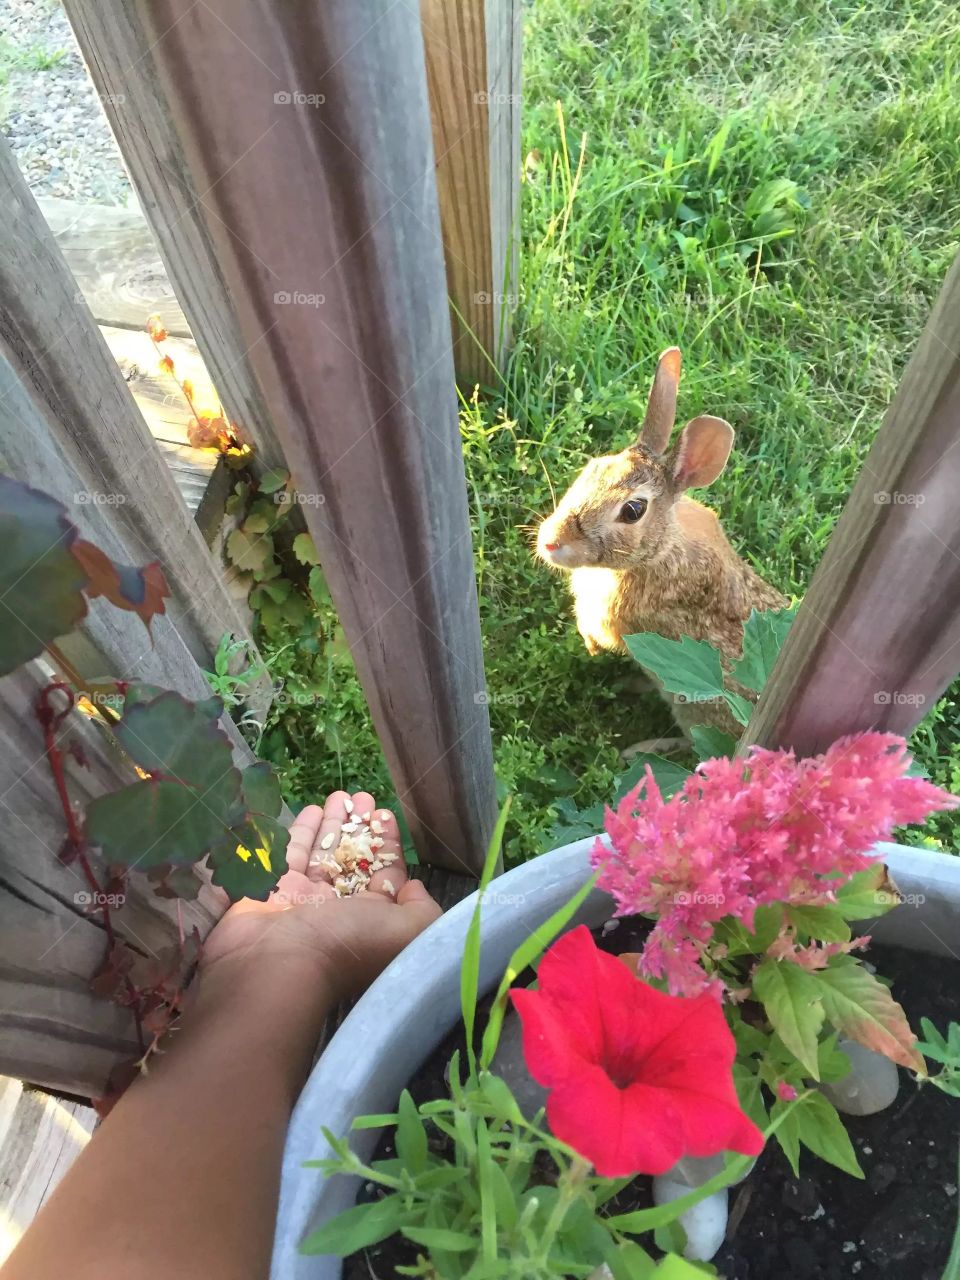 Bunny lunch. Feeding backyard bunny